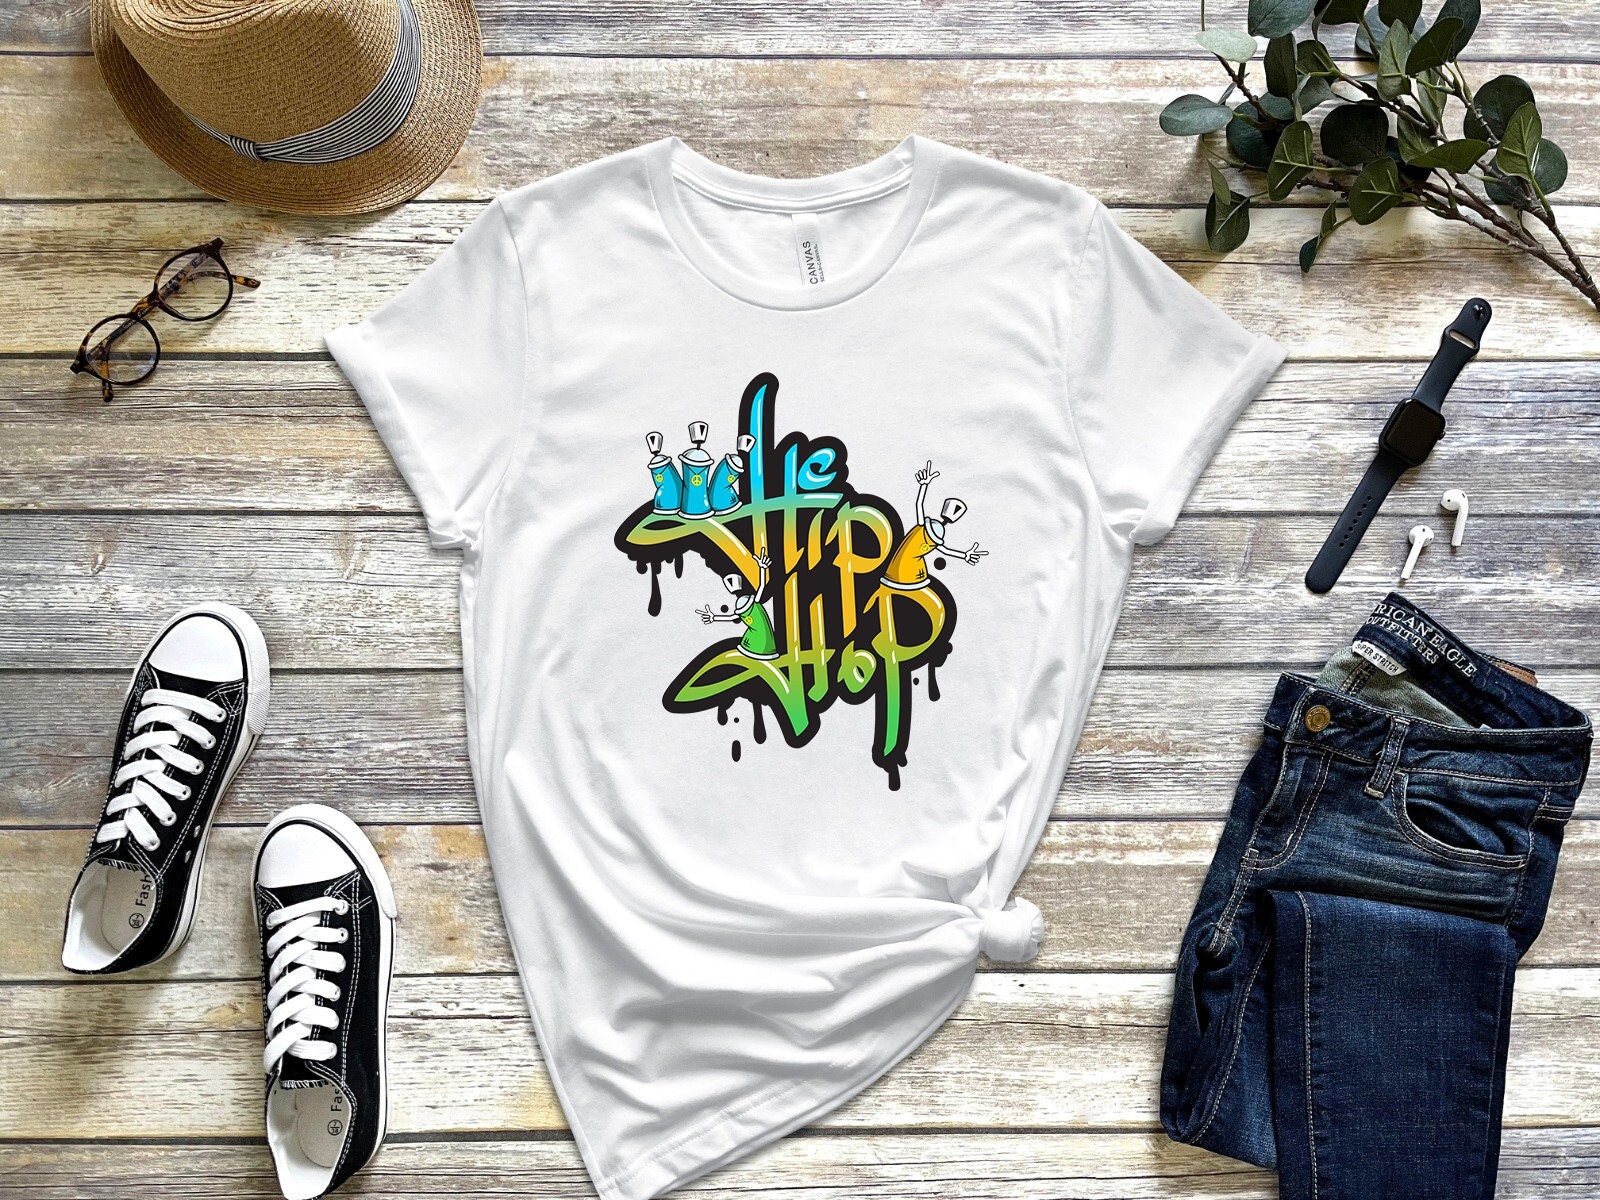 LOUISIANA HIP HOP LICENSE PLATE VINTAGE T-Shirt – Rhyme Life Apparel